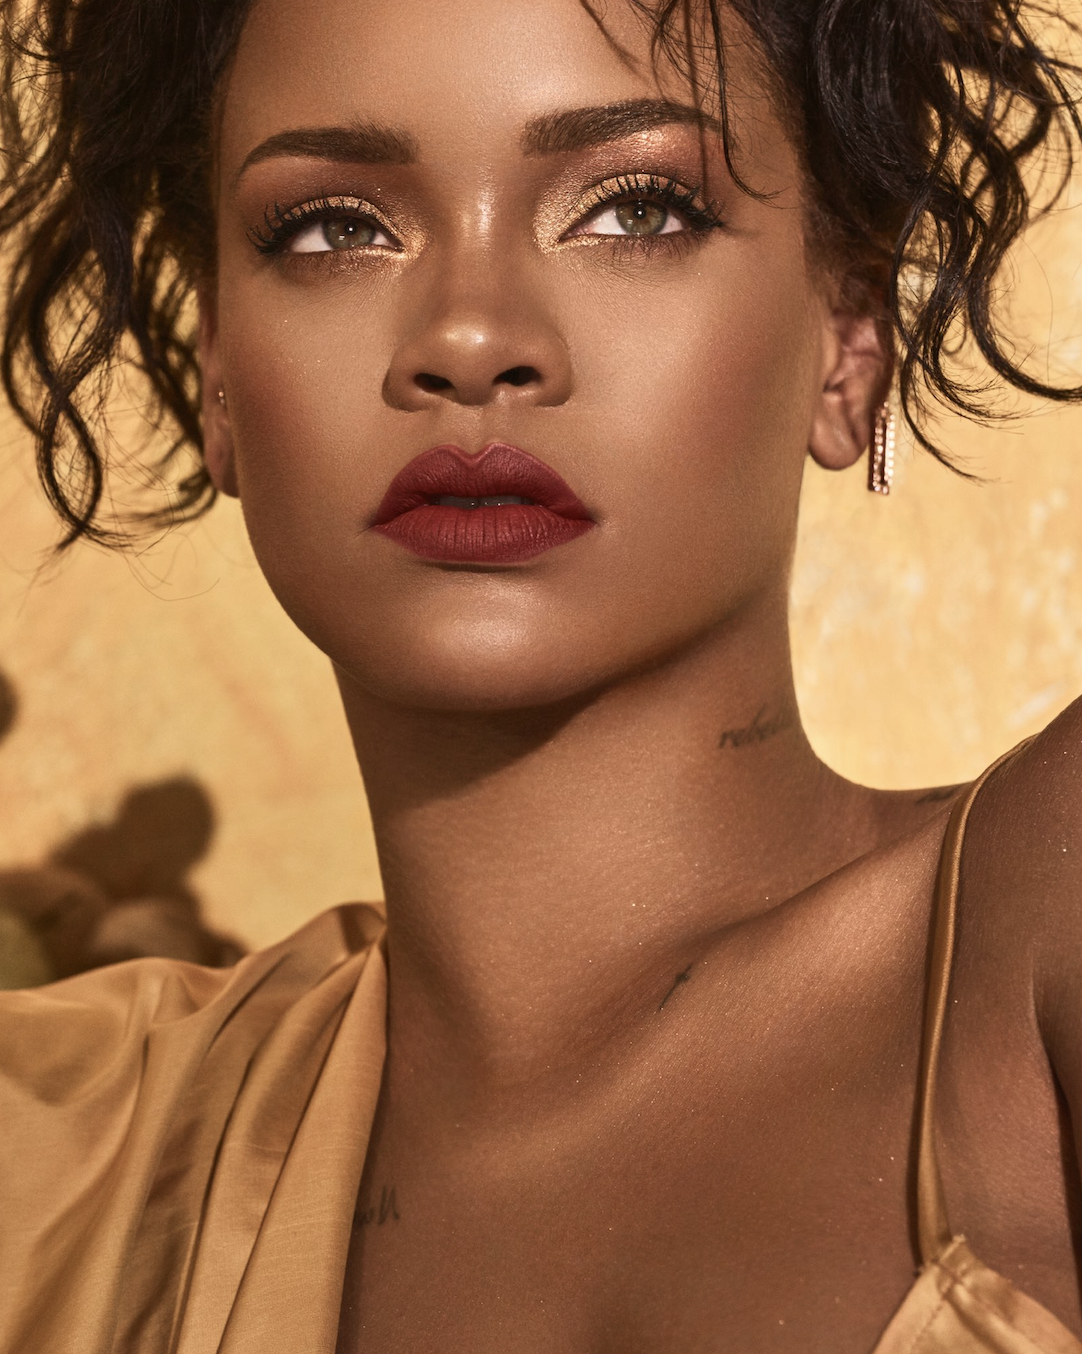 Celebs & StartUps: Rihanna's Billion Dollar Journey!  #Rihanna is now a  billionaire! 💸 In the first episode of #Celebs & #StartUps, we trace  #BadGirlRiRi's entrepreneurial life! 🤑 From a pop star